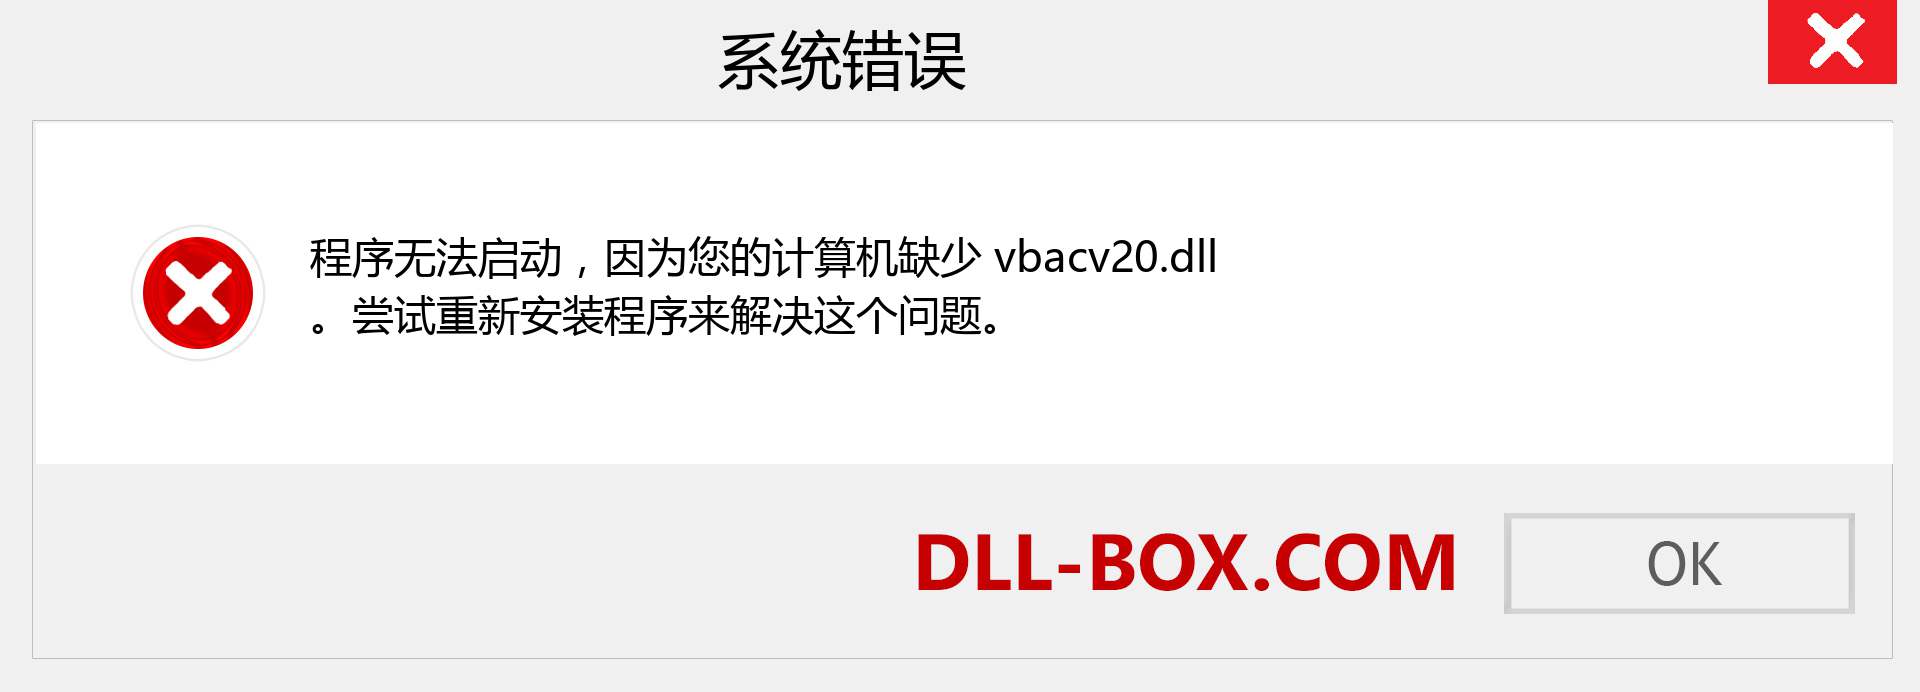 vbacv20.dll 文件丢失？。 适用于 Windows 7、8、10 的下载 - 修复 Windows、照片、图像上的 vbacv20 dll 丢失错误